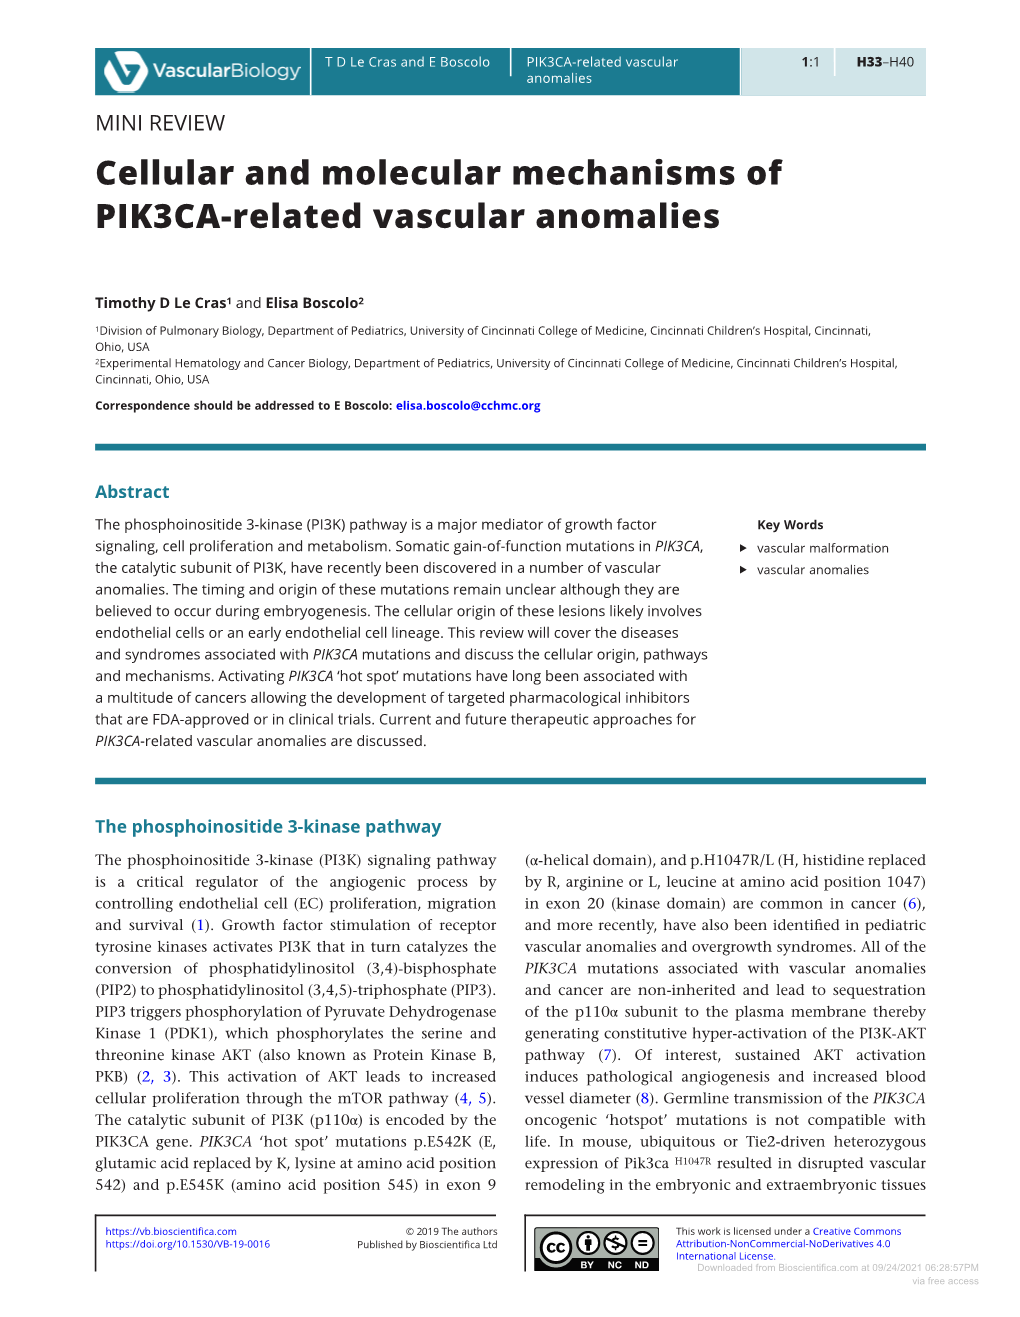 Cellular and Molecular Mechanisms of PIK3CA-Related Vascular Anomalies